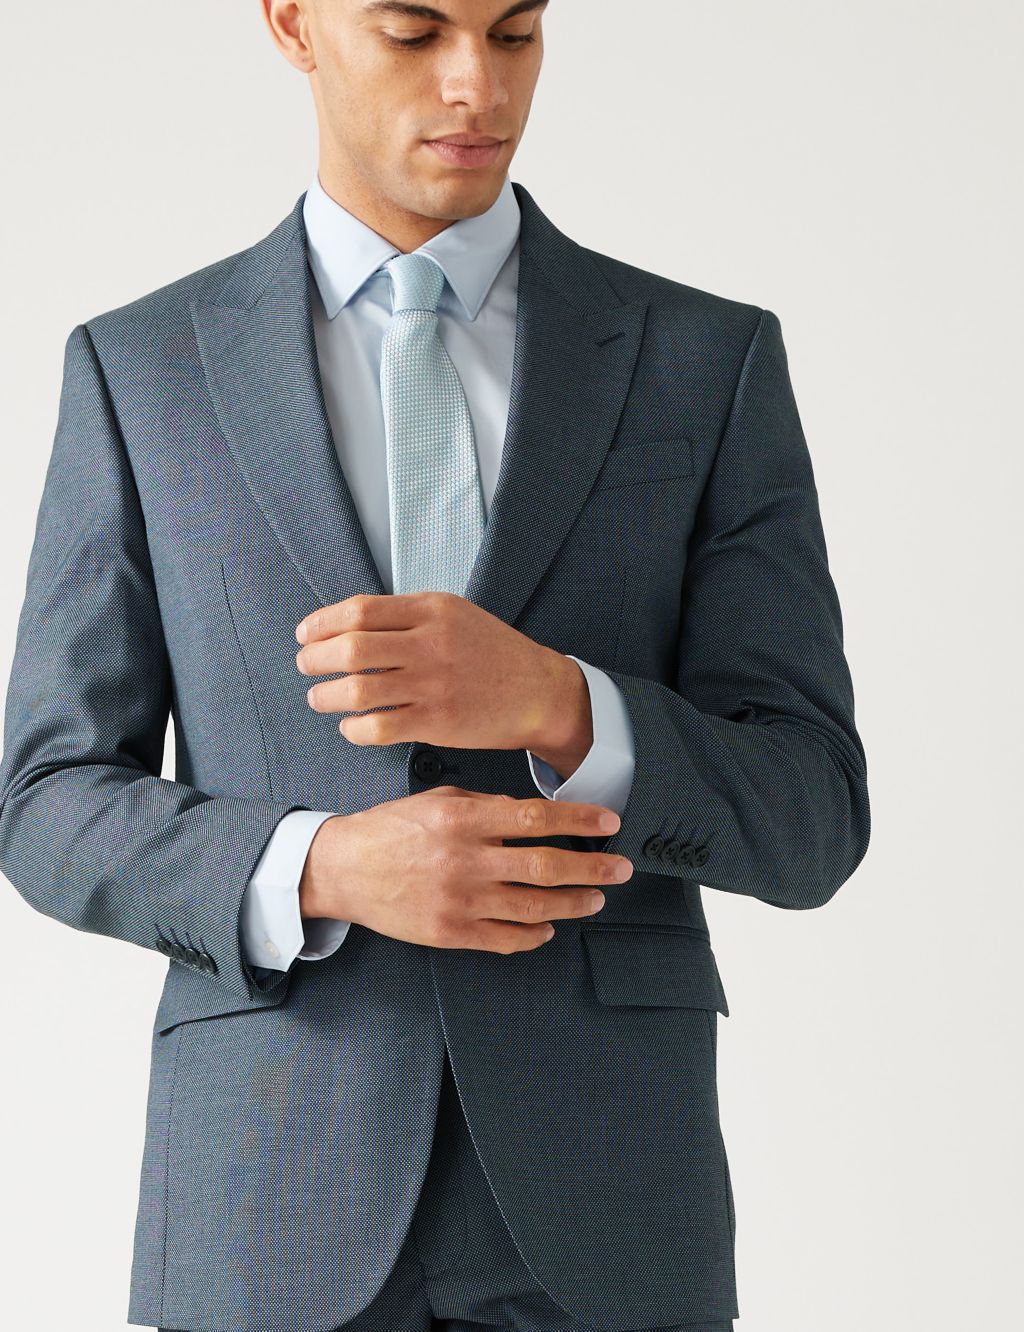 Regular Fit Textured Stretch Suit Jacket image 4